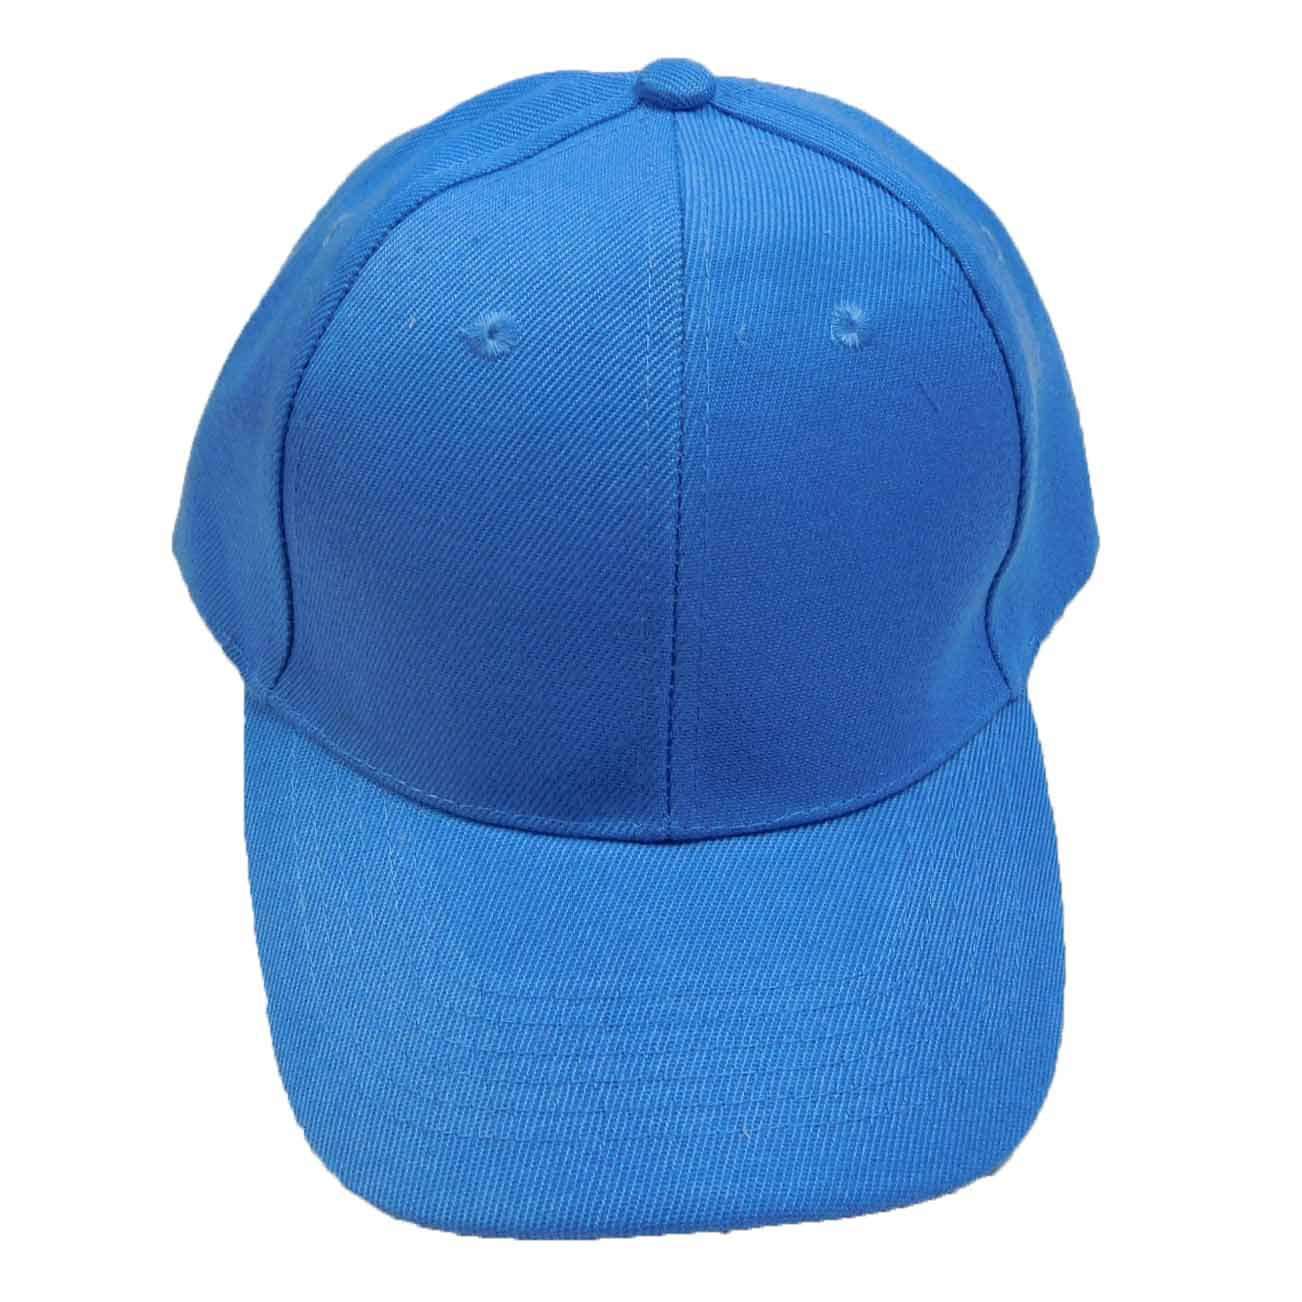 Baseball Cap with Stitched Bill, Cap - SetarTrading Hats 